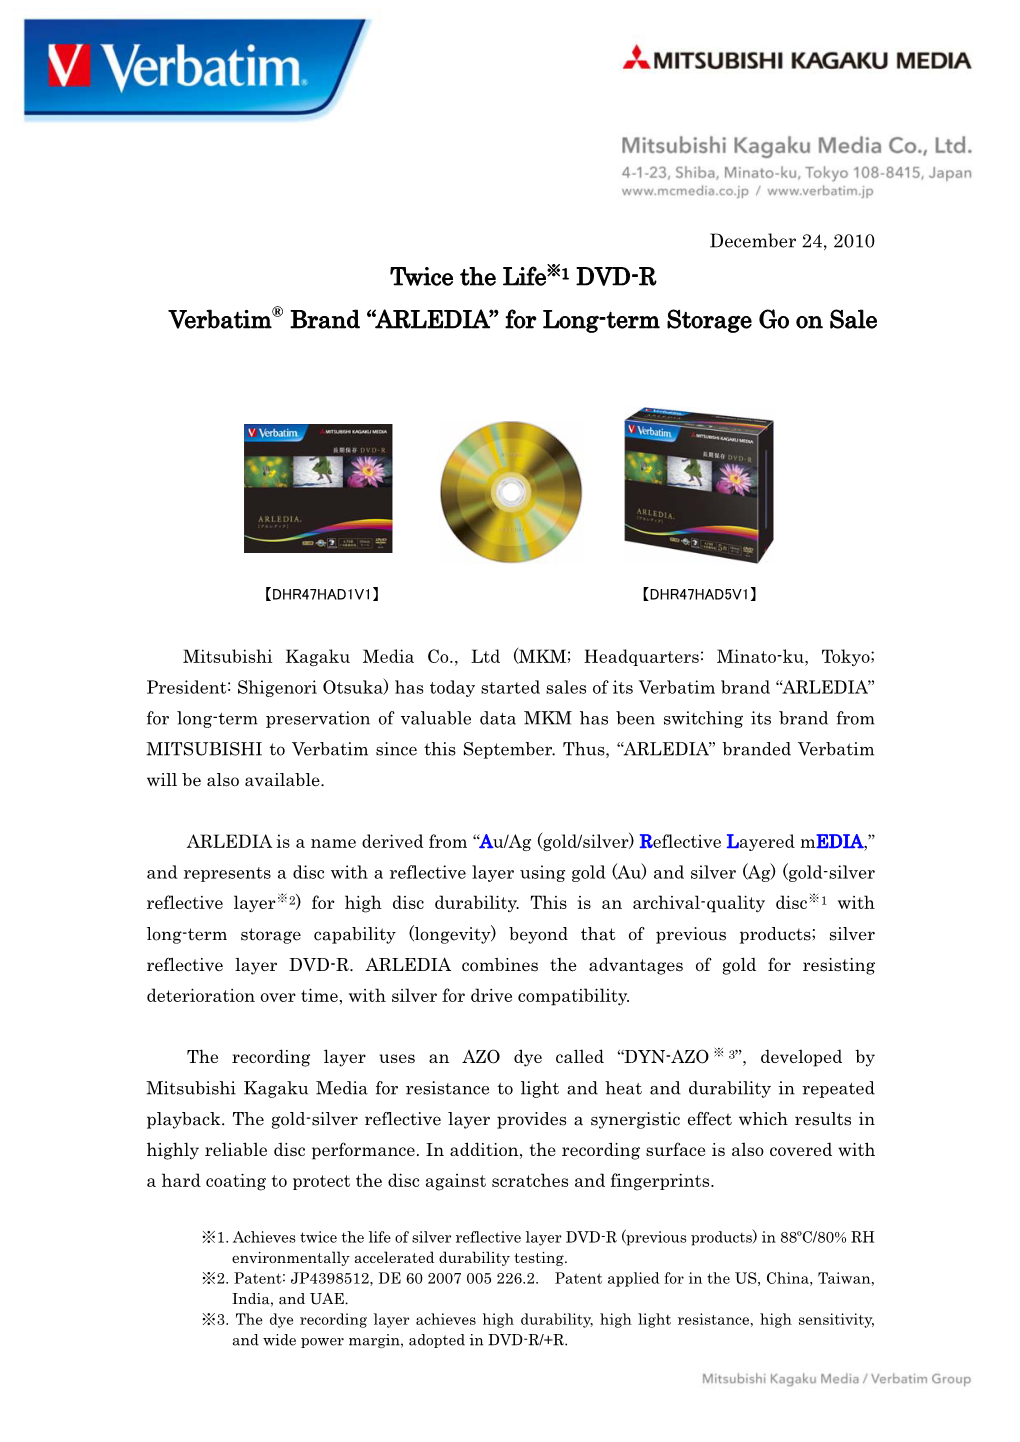 Twice the Life※1 DVD-R Verbatim® Brand “ARLEDIA” for Long-Term Storage Go on Sale